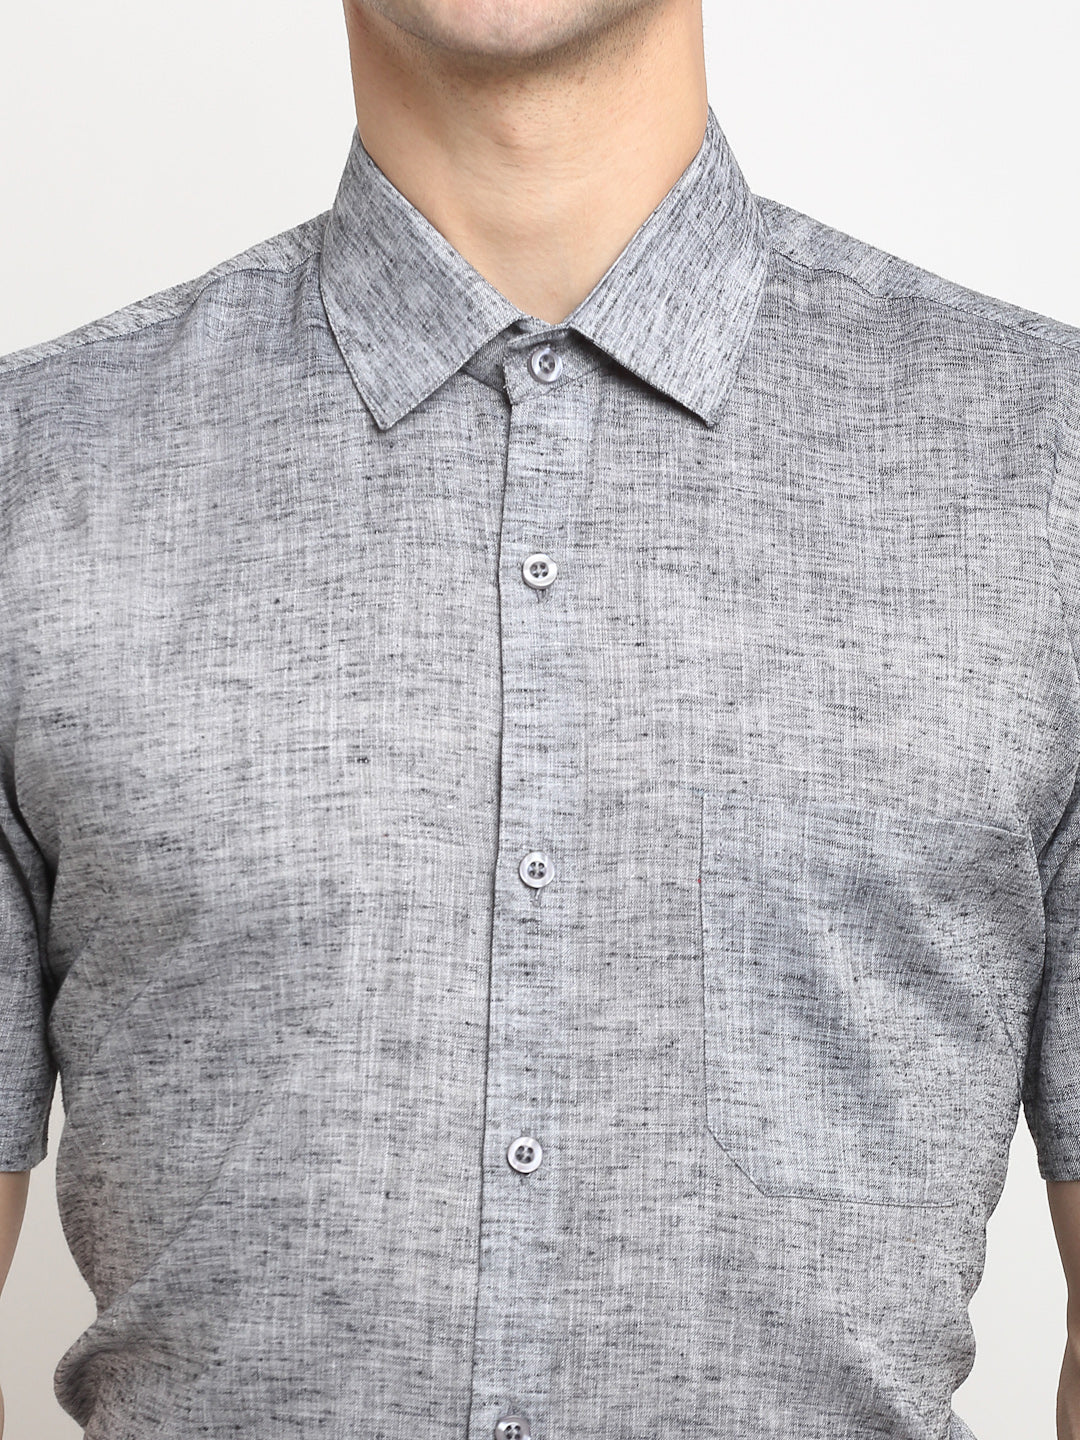 Jainish Grey Men's Solid Cotton Half Sleeves Formal Shirt